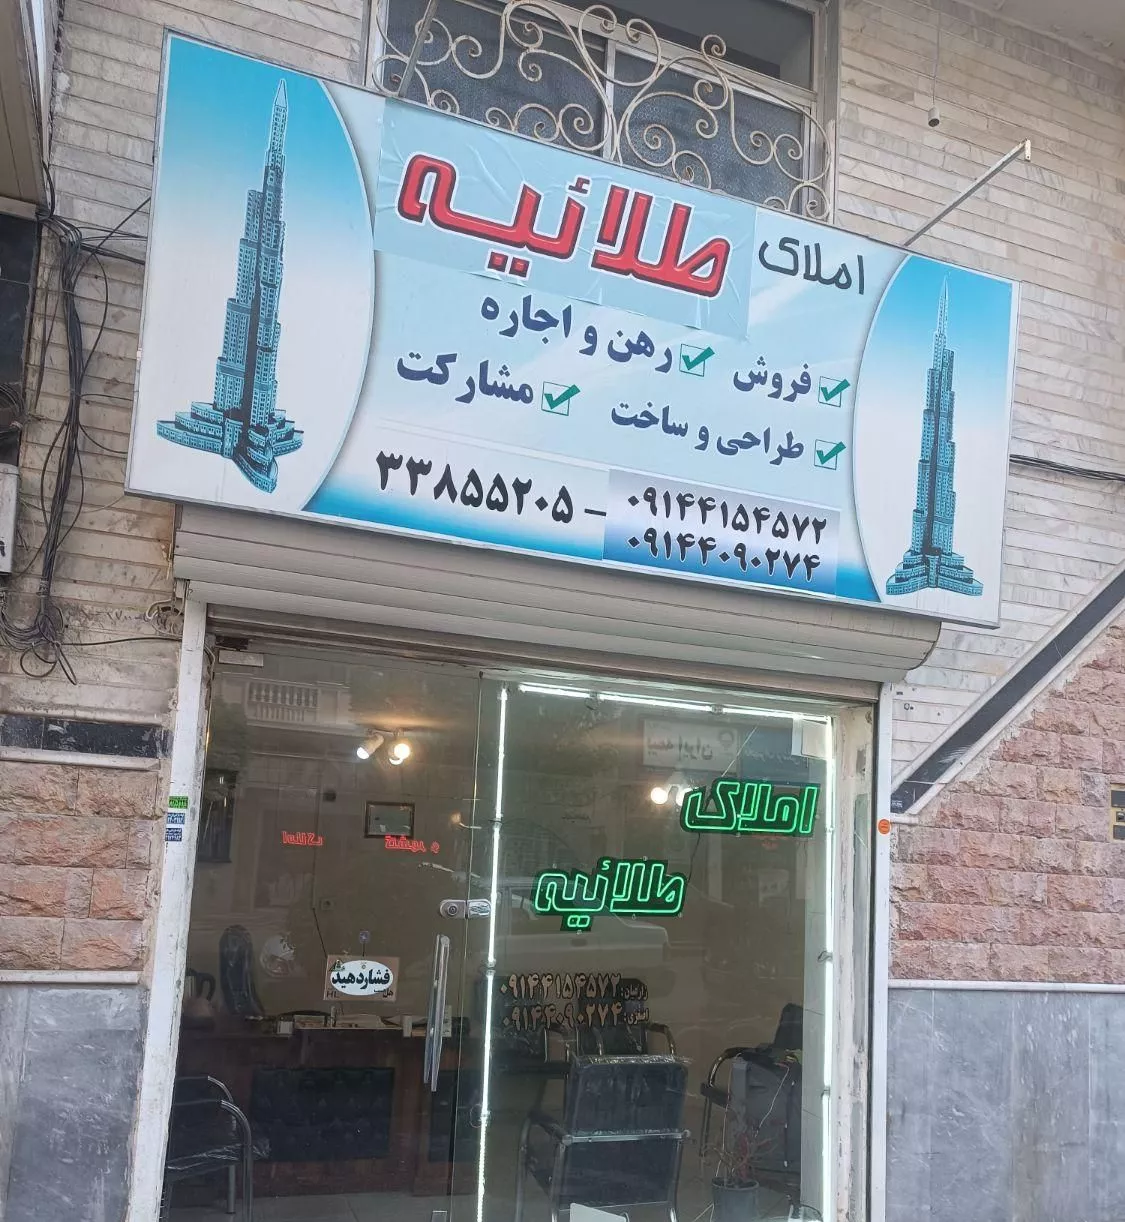 اجاره مغازه در ائل گلی گلشهر گلگشت غربی